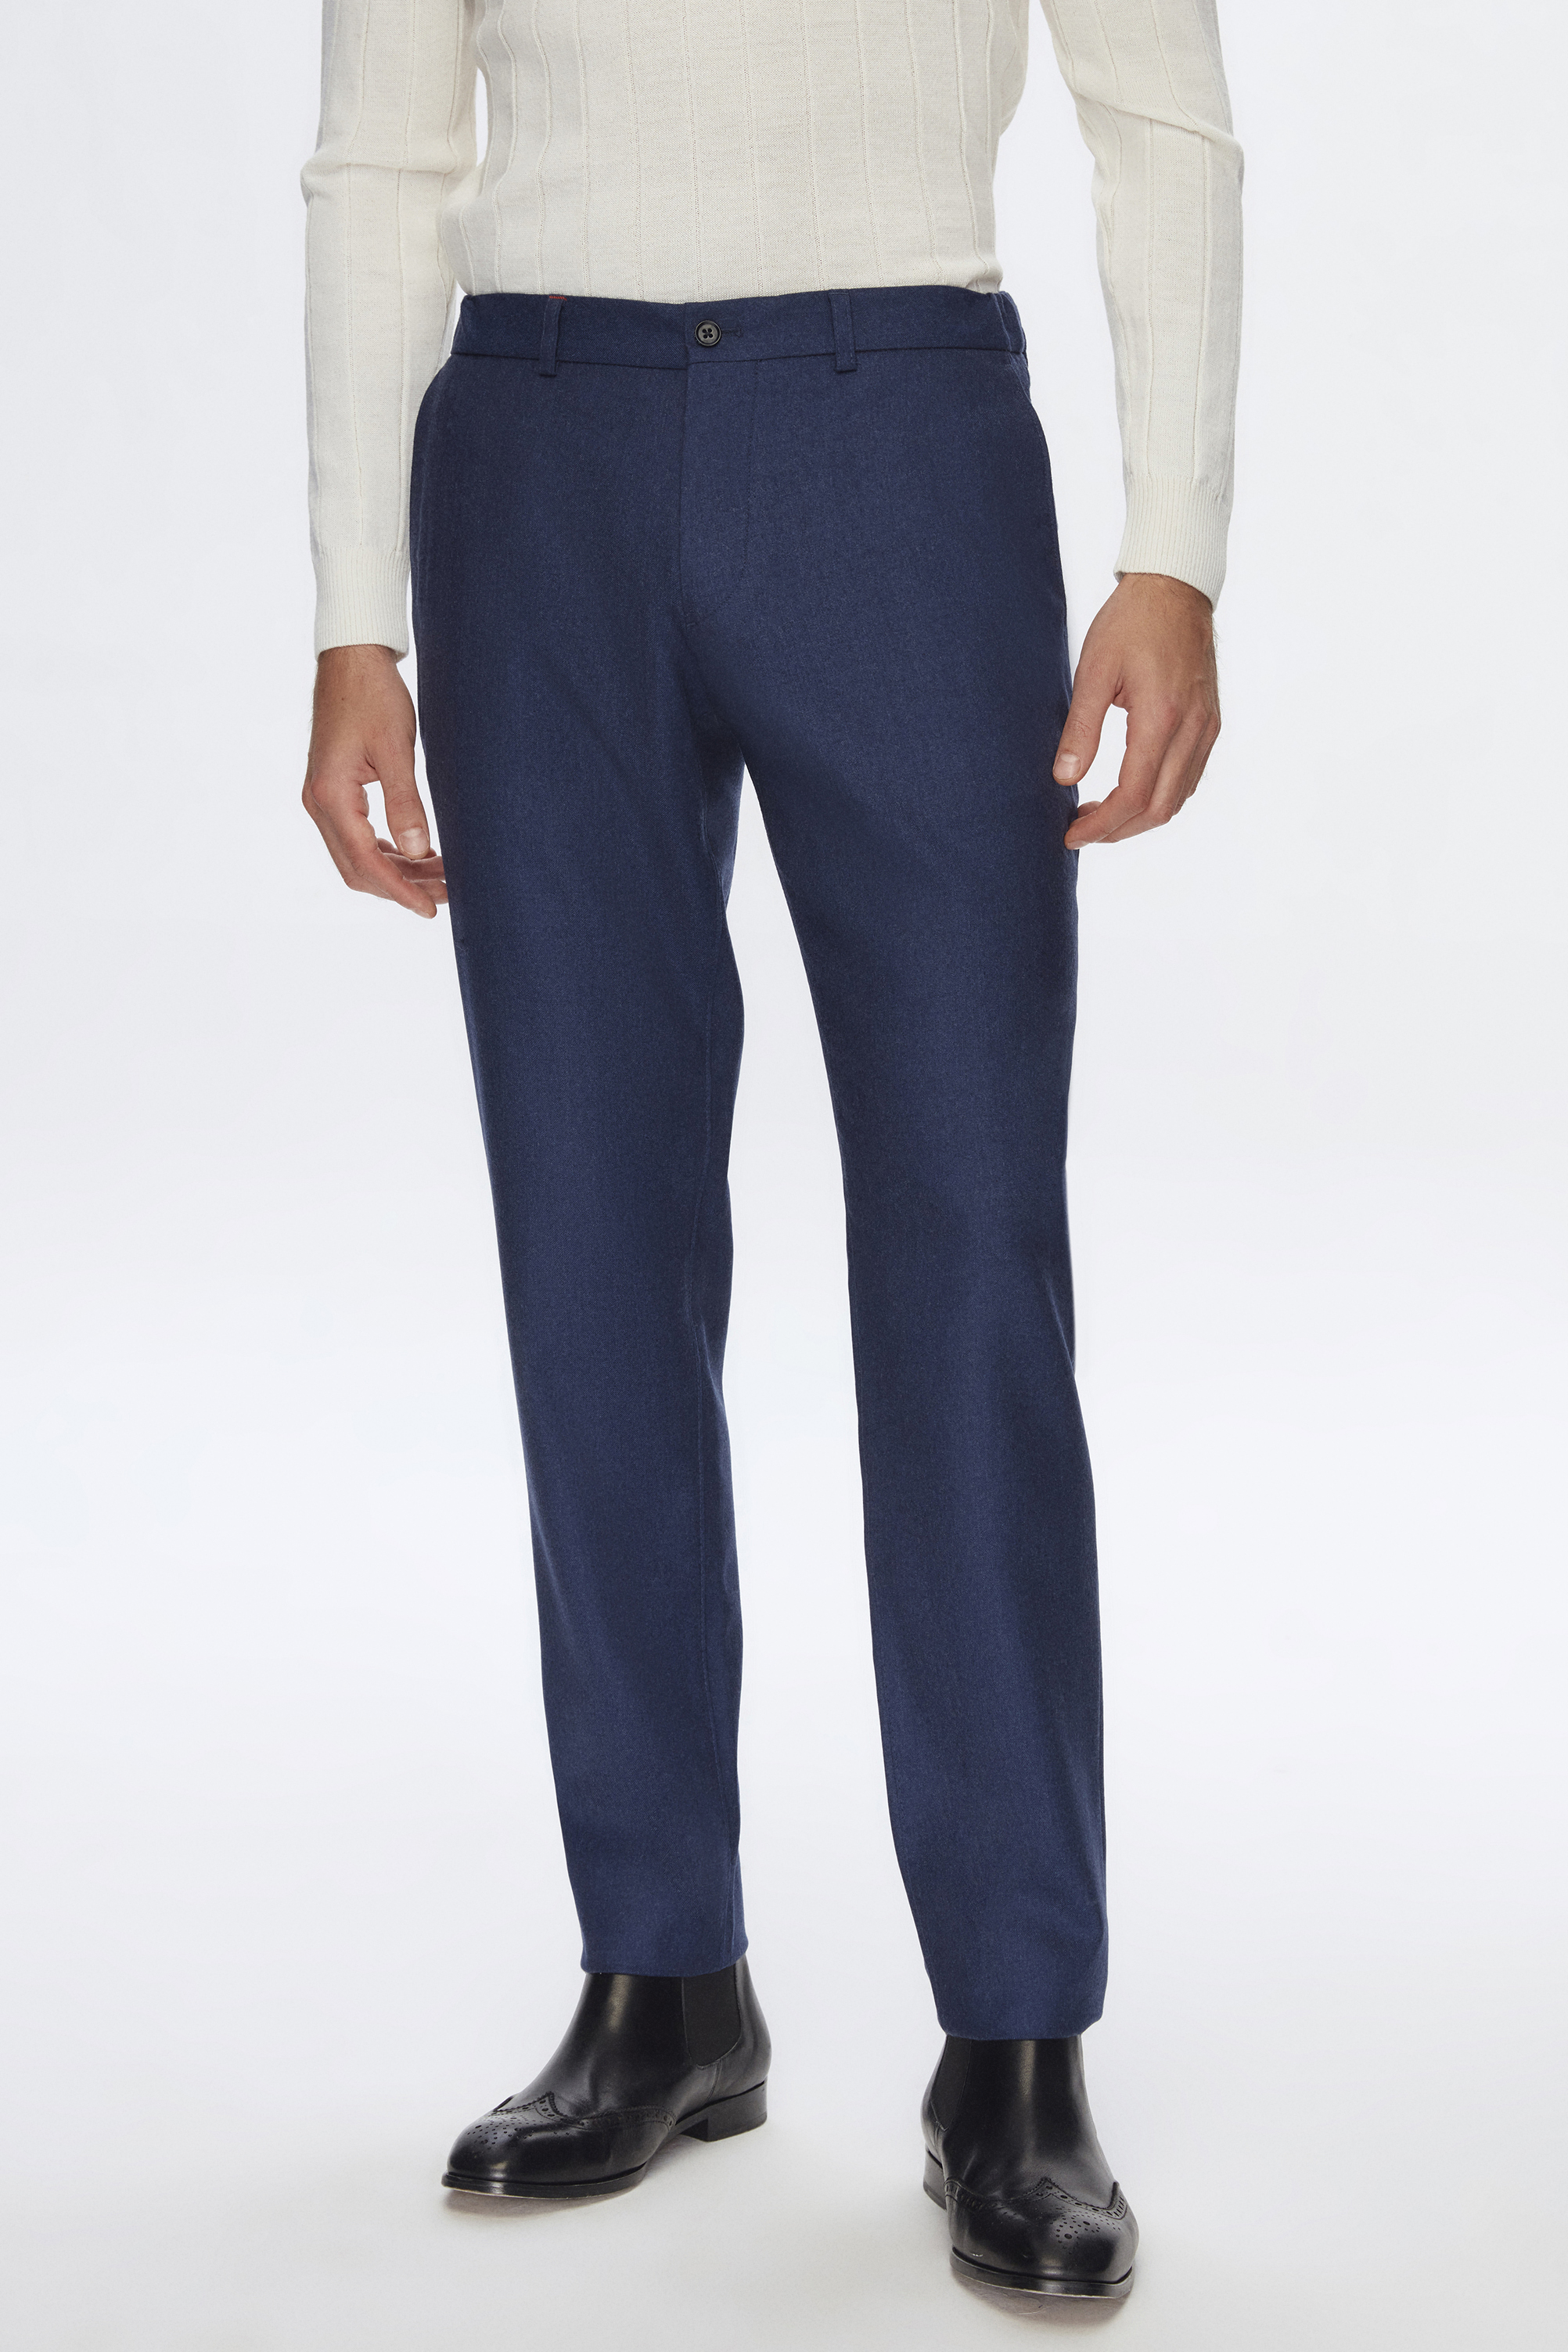 Damat Tween Damat Slim Fit Lacivert Düz %100 Yün Chino Pantolon. 1